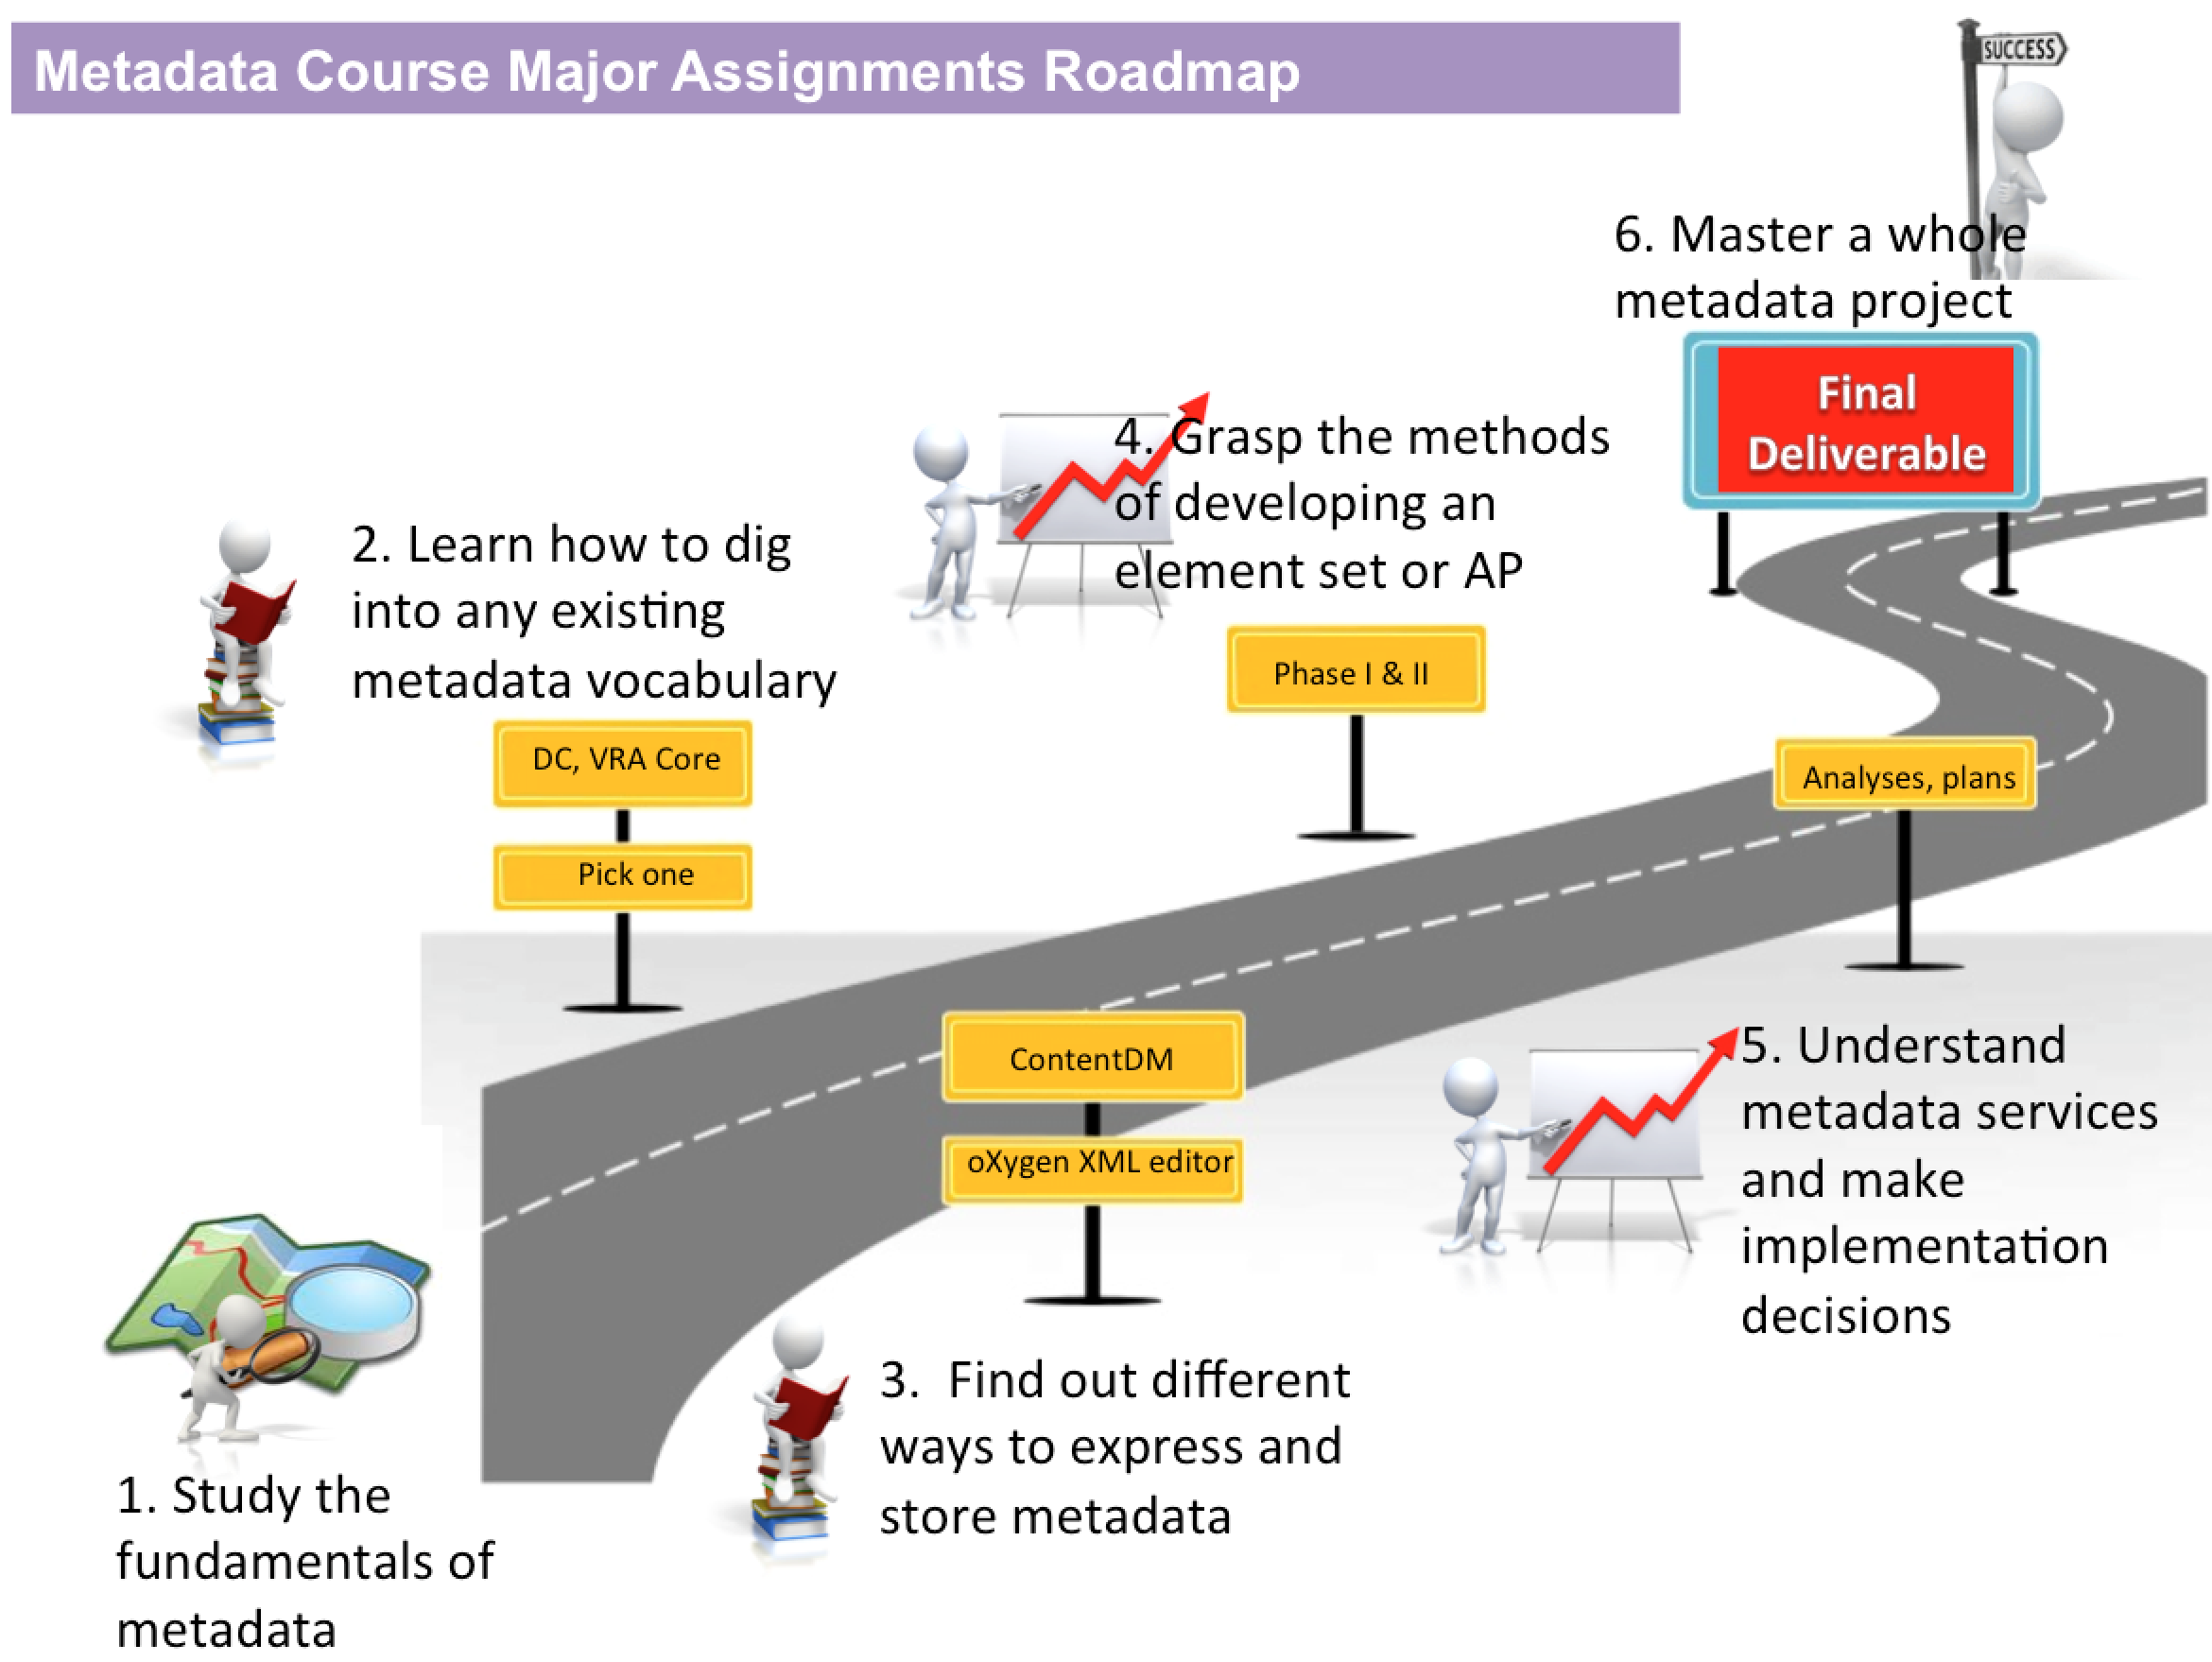 Metadata course assignment roadmap